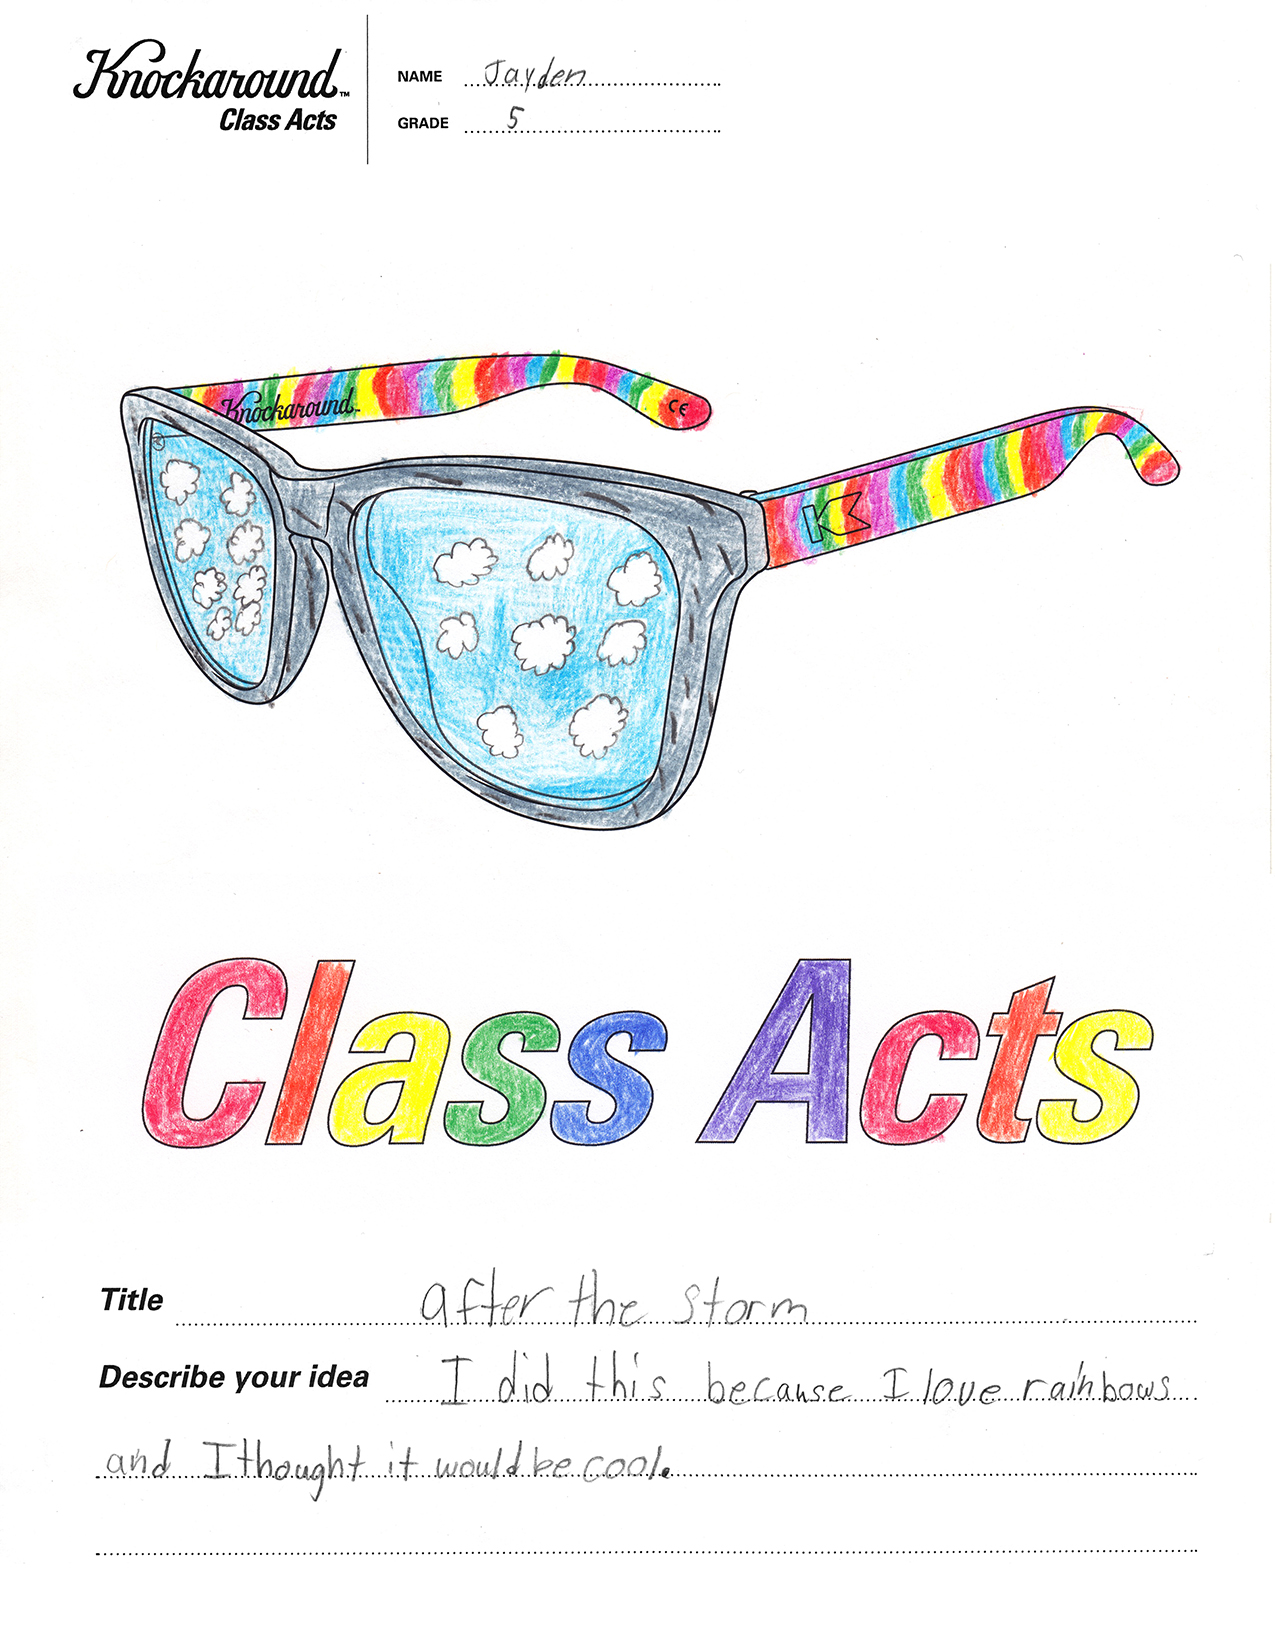 5th grader Jayden's original Knockaround design "worksheet."